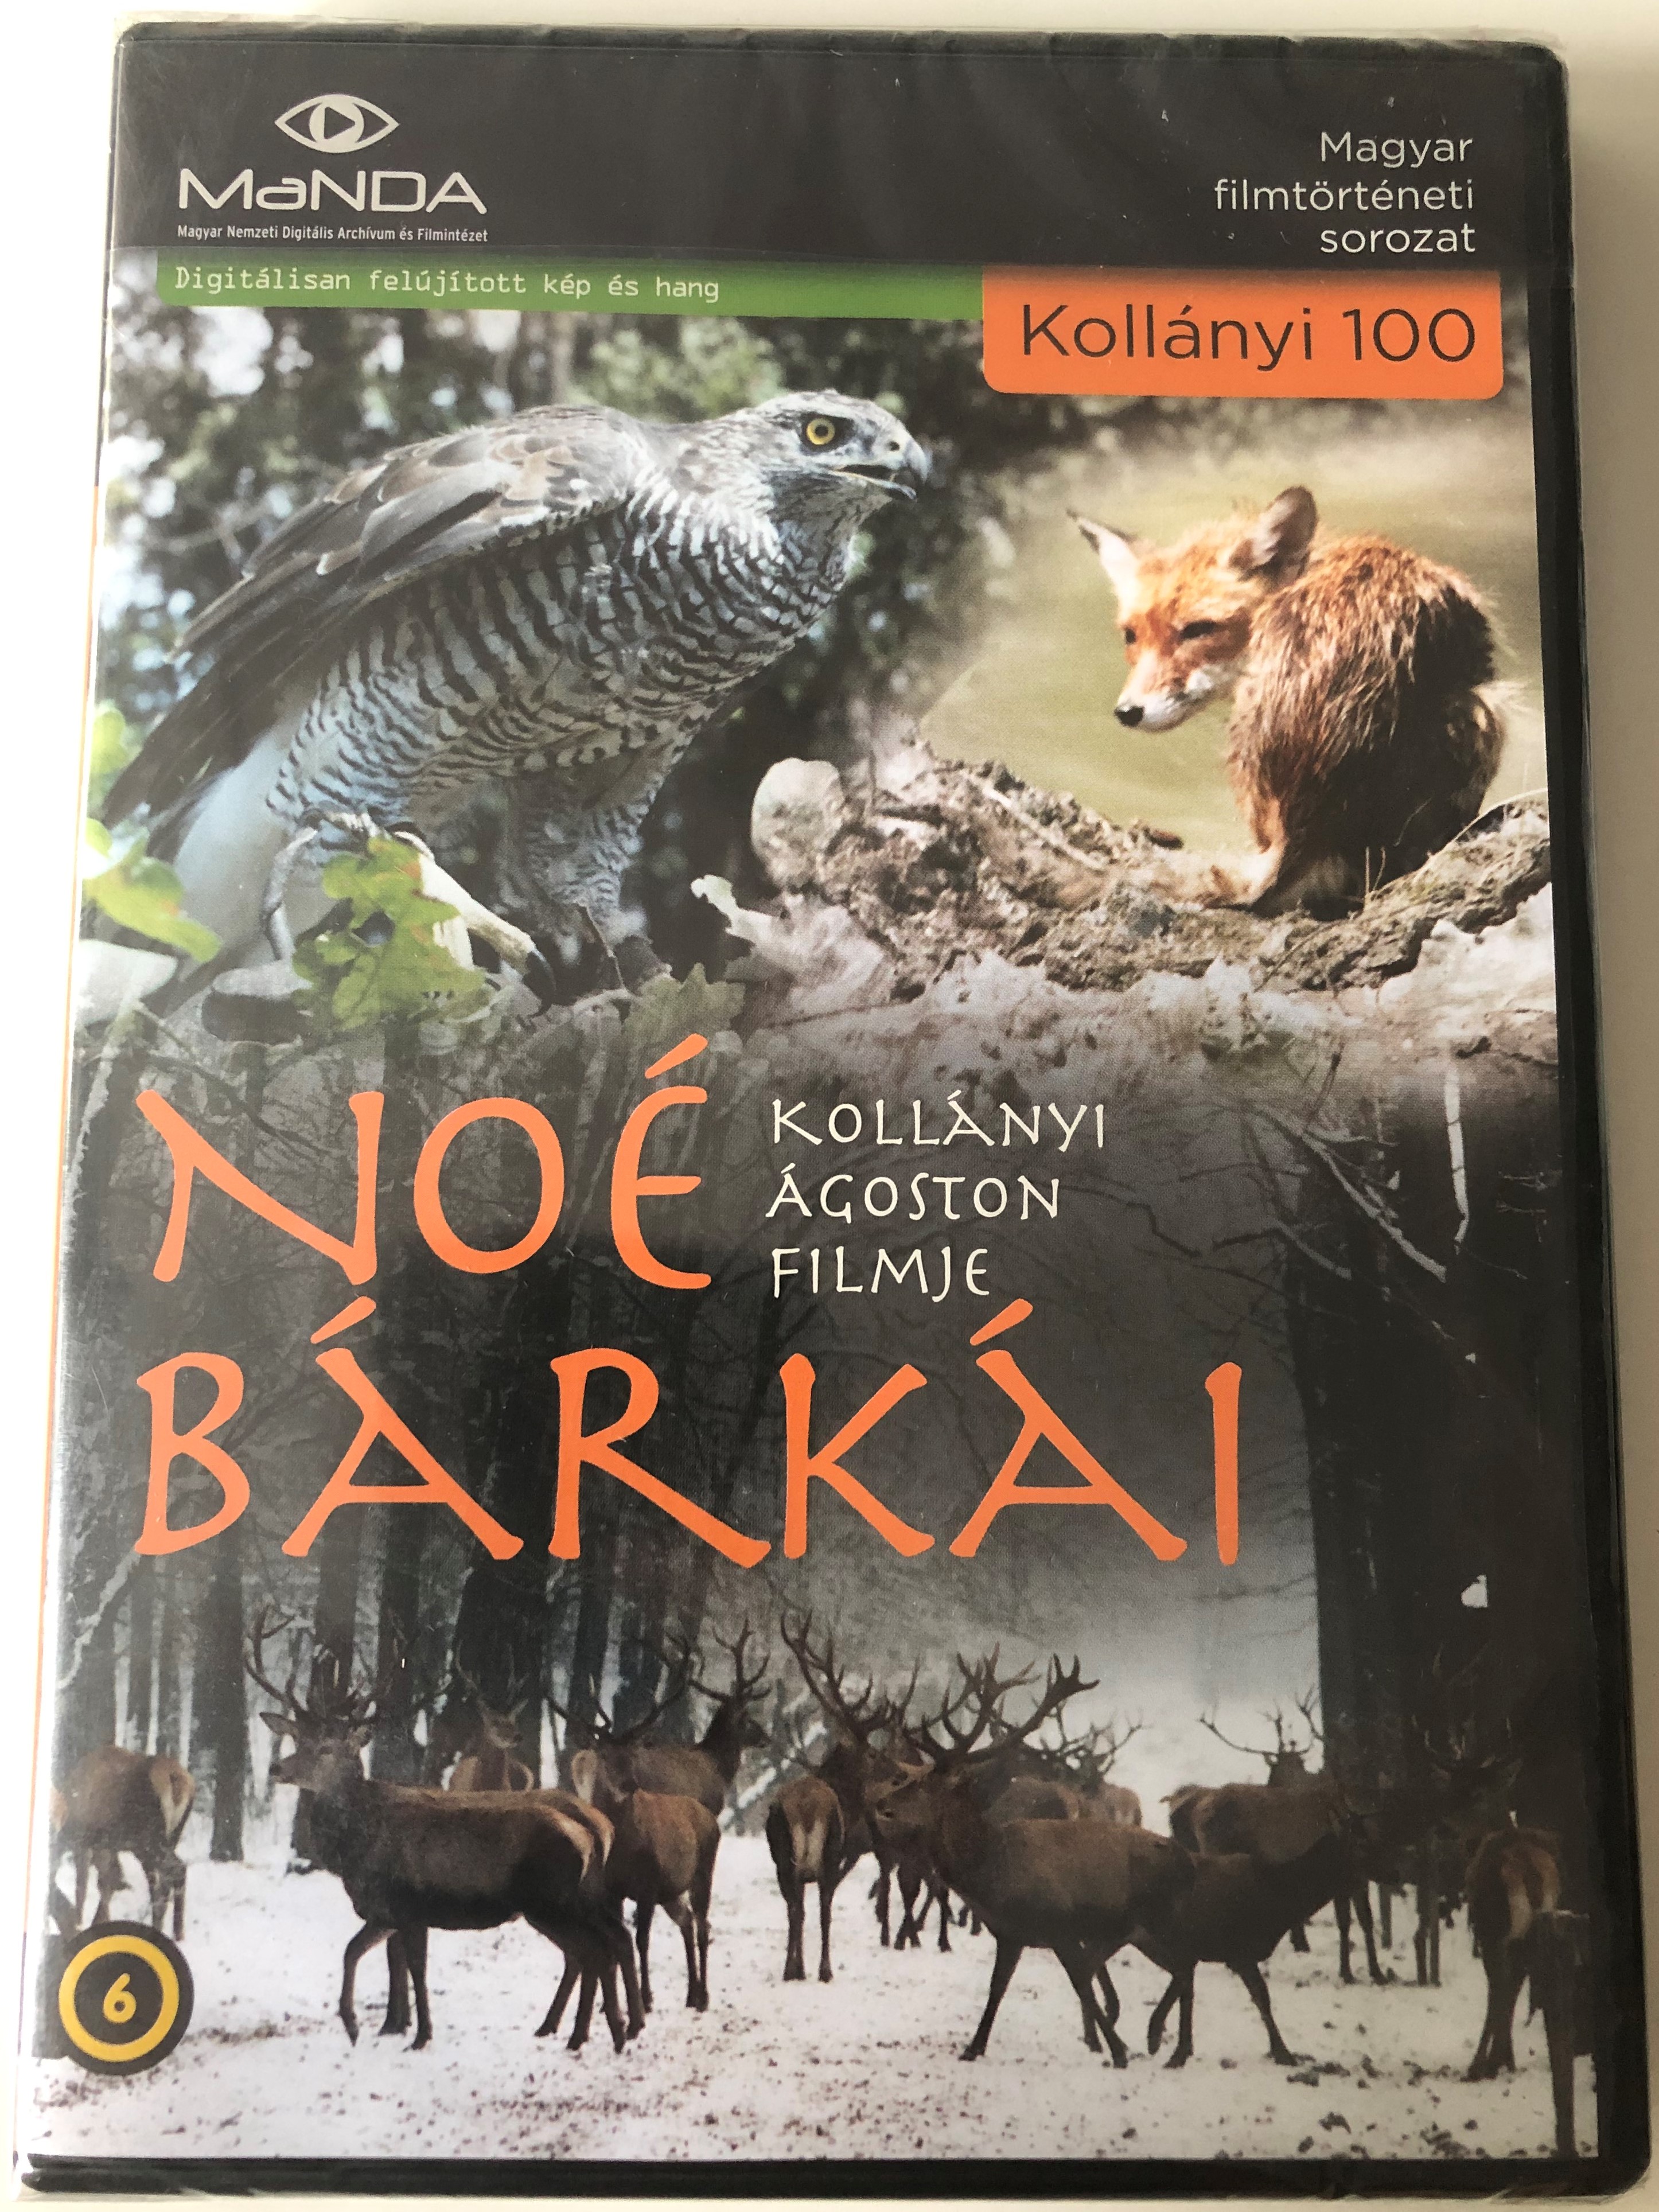 Noé Bárkái DVD 1983 Noah's Arks / Directed by Kollányi Ágoston / Kollányi  100 / Magyar filmtörténeti sorozat - bibleinmylanguage